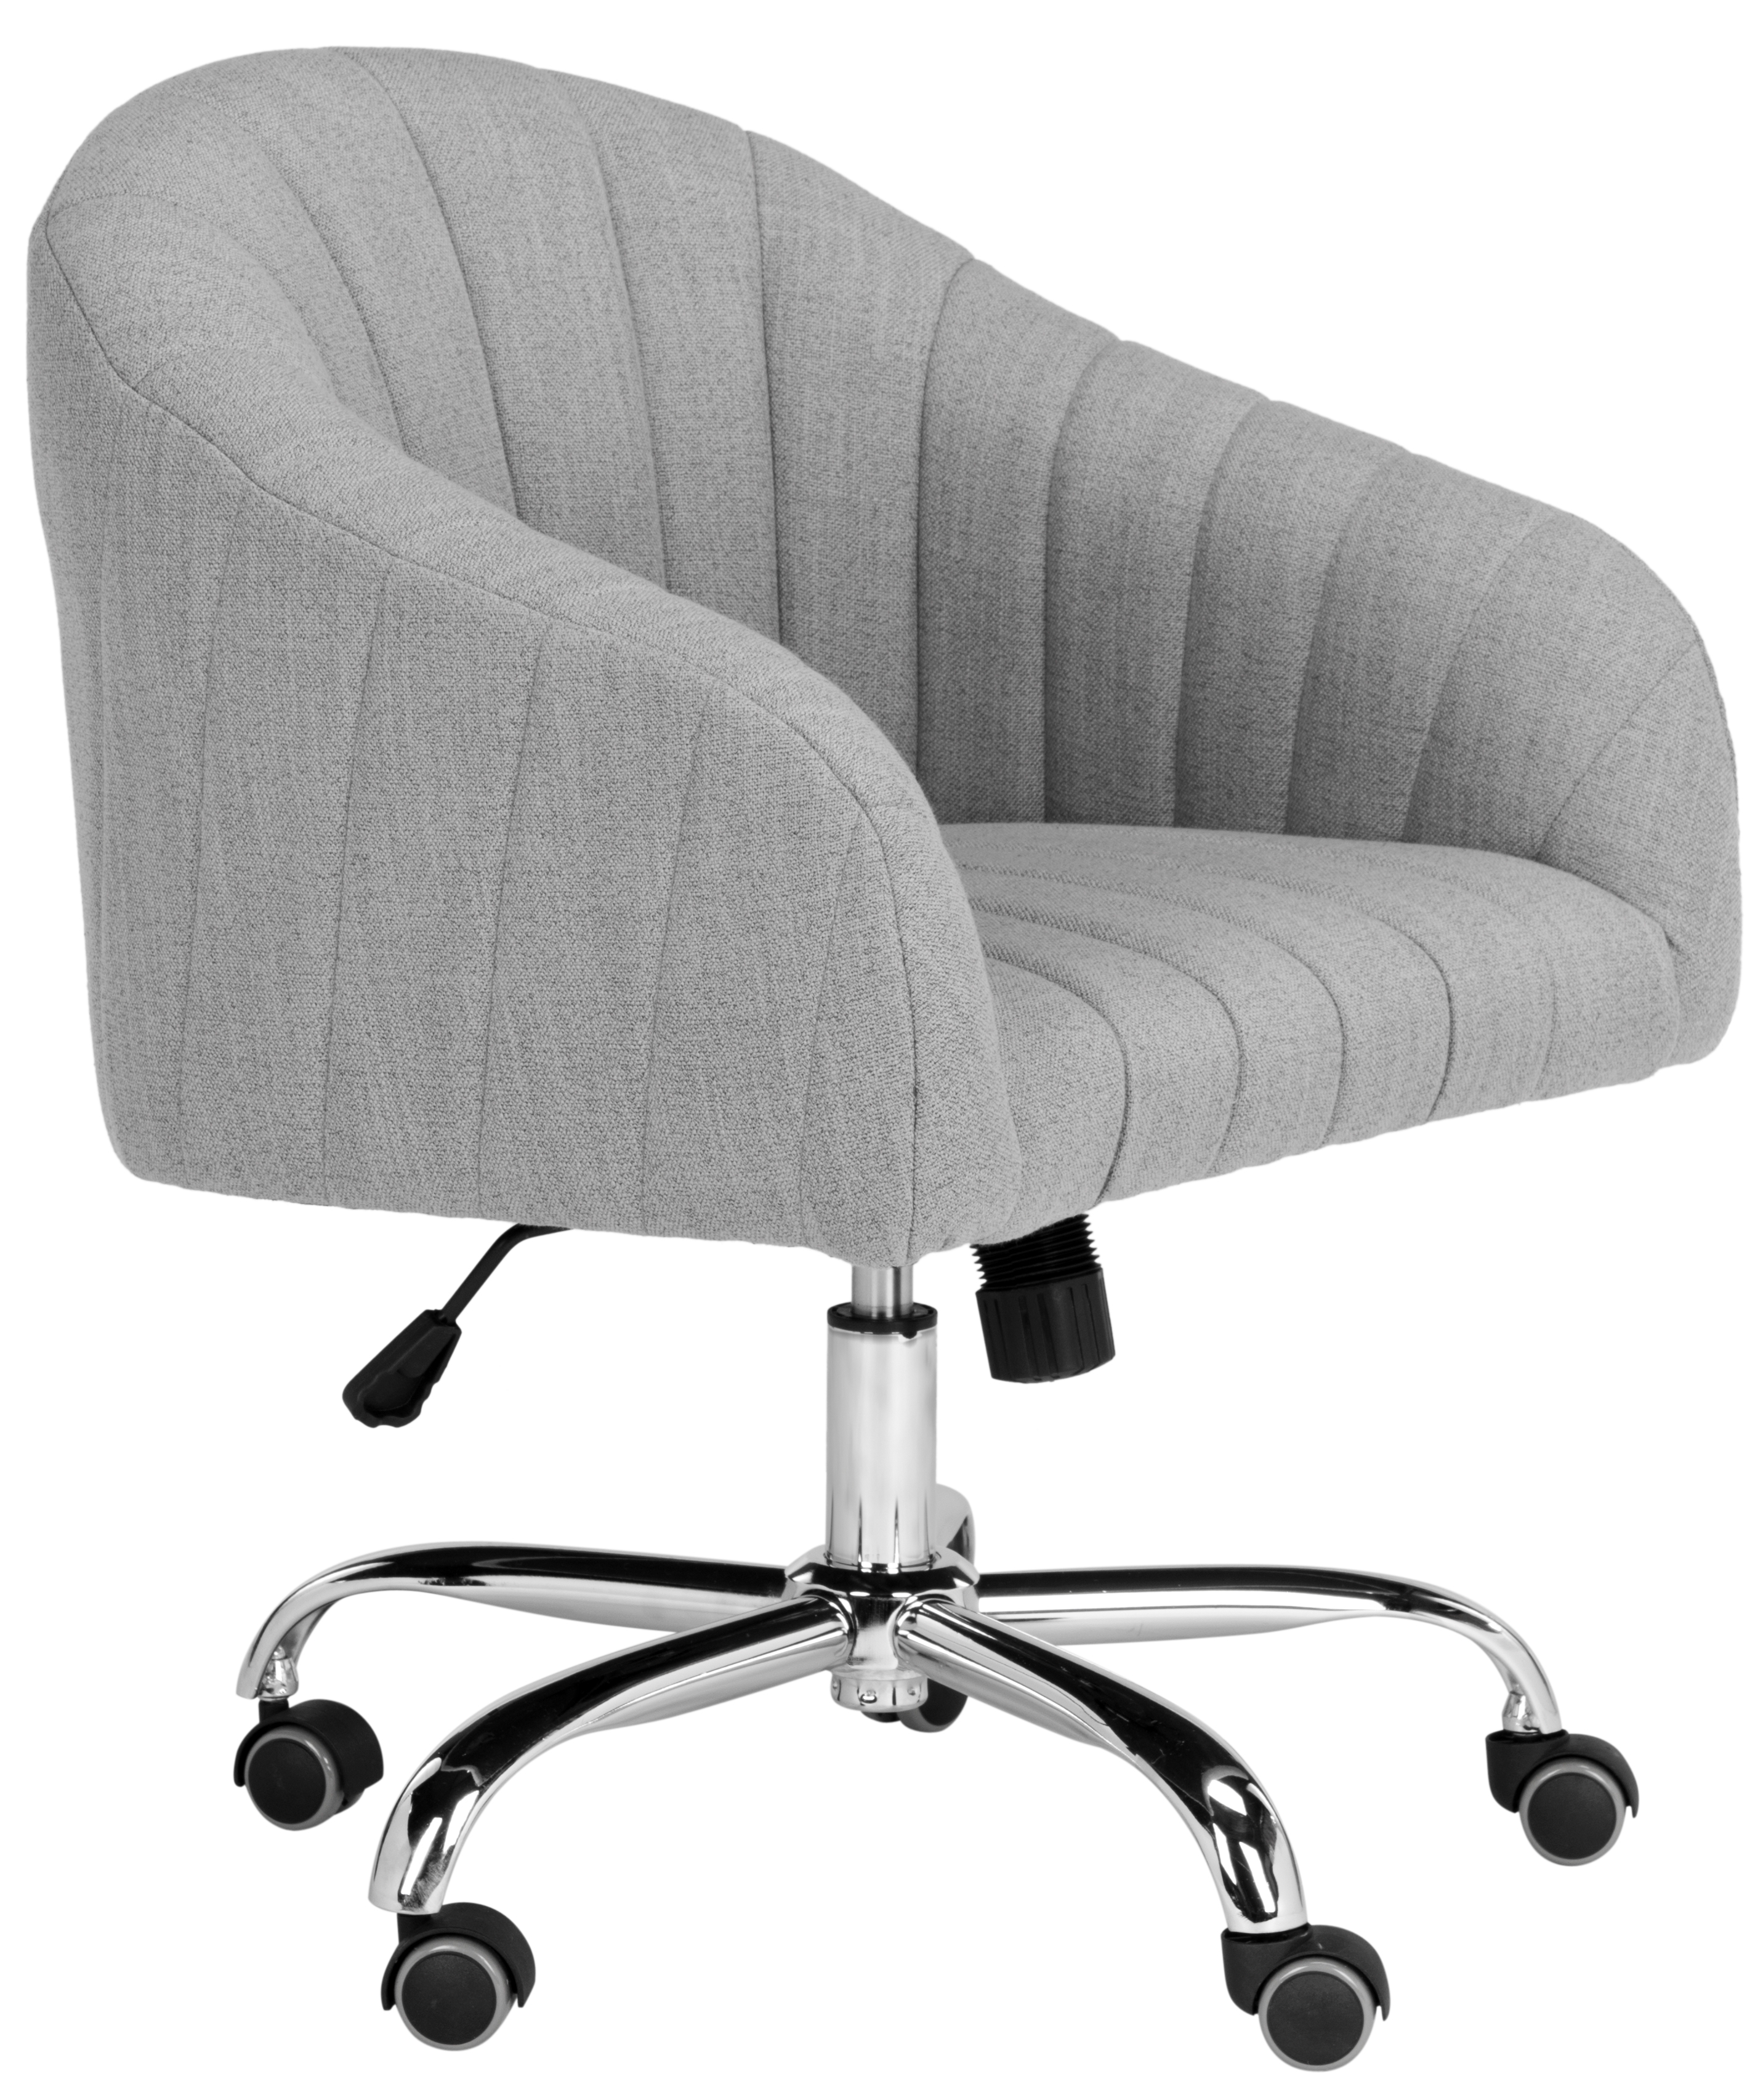 Themis Linen Chrome Leg Swivel Office Chair - Grey/Chrome - Arlo Home - Image 1